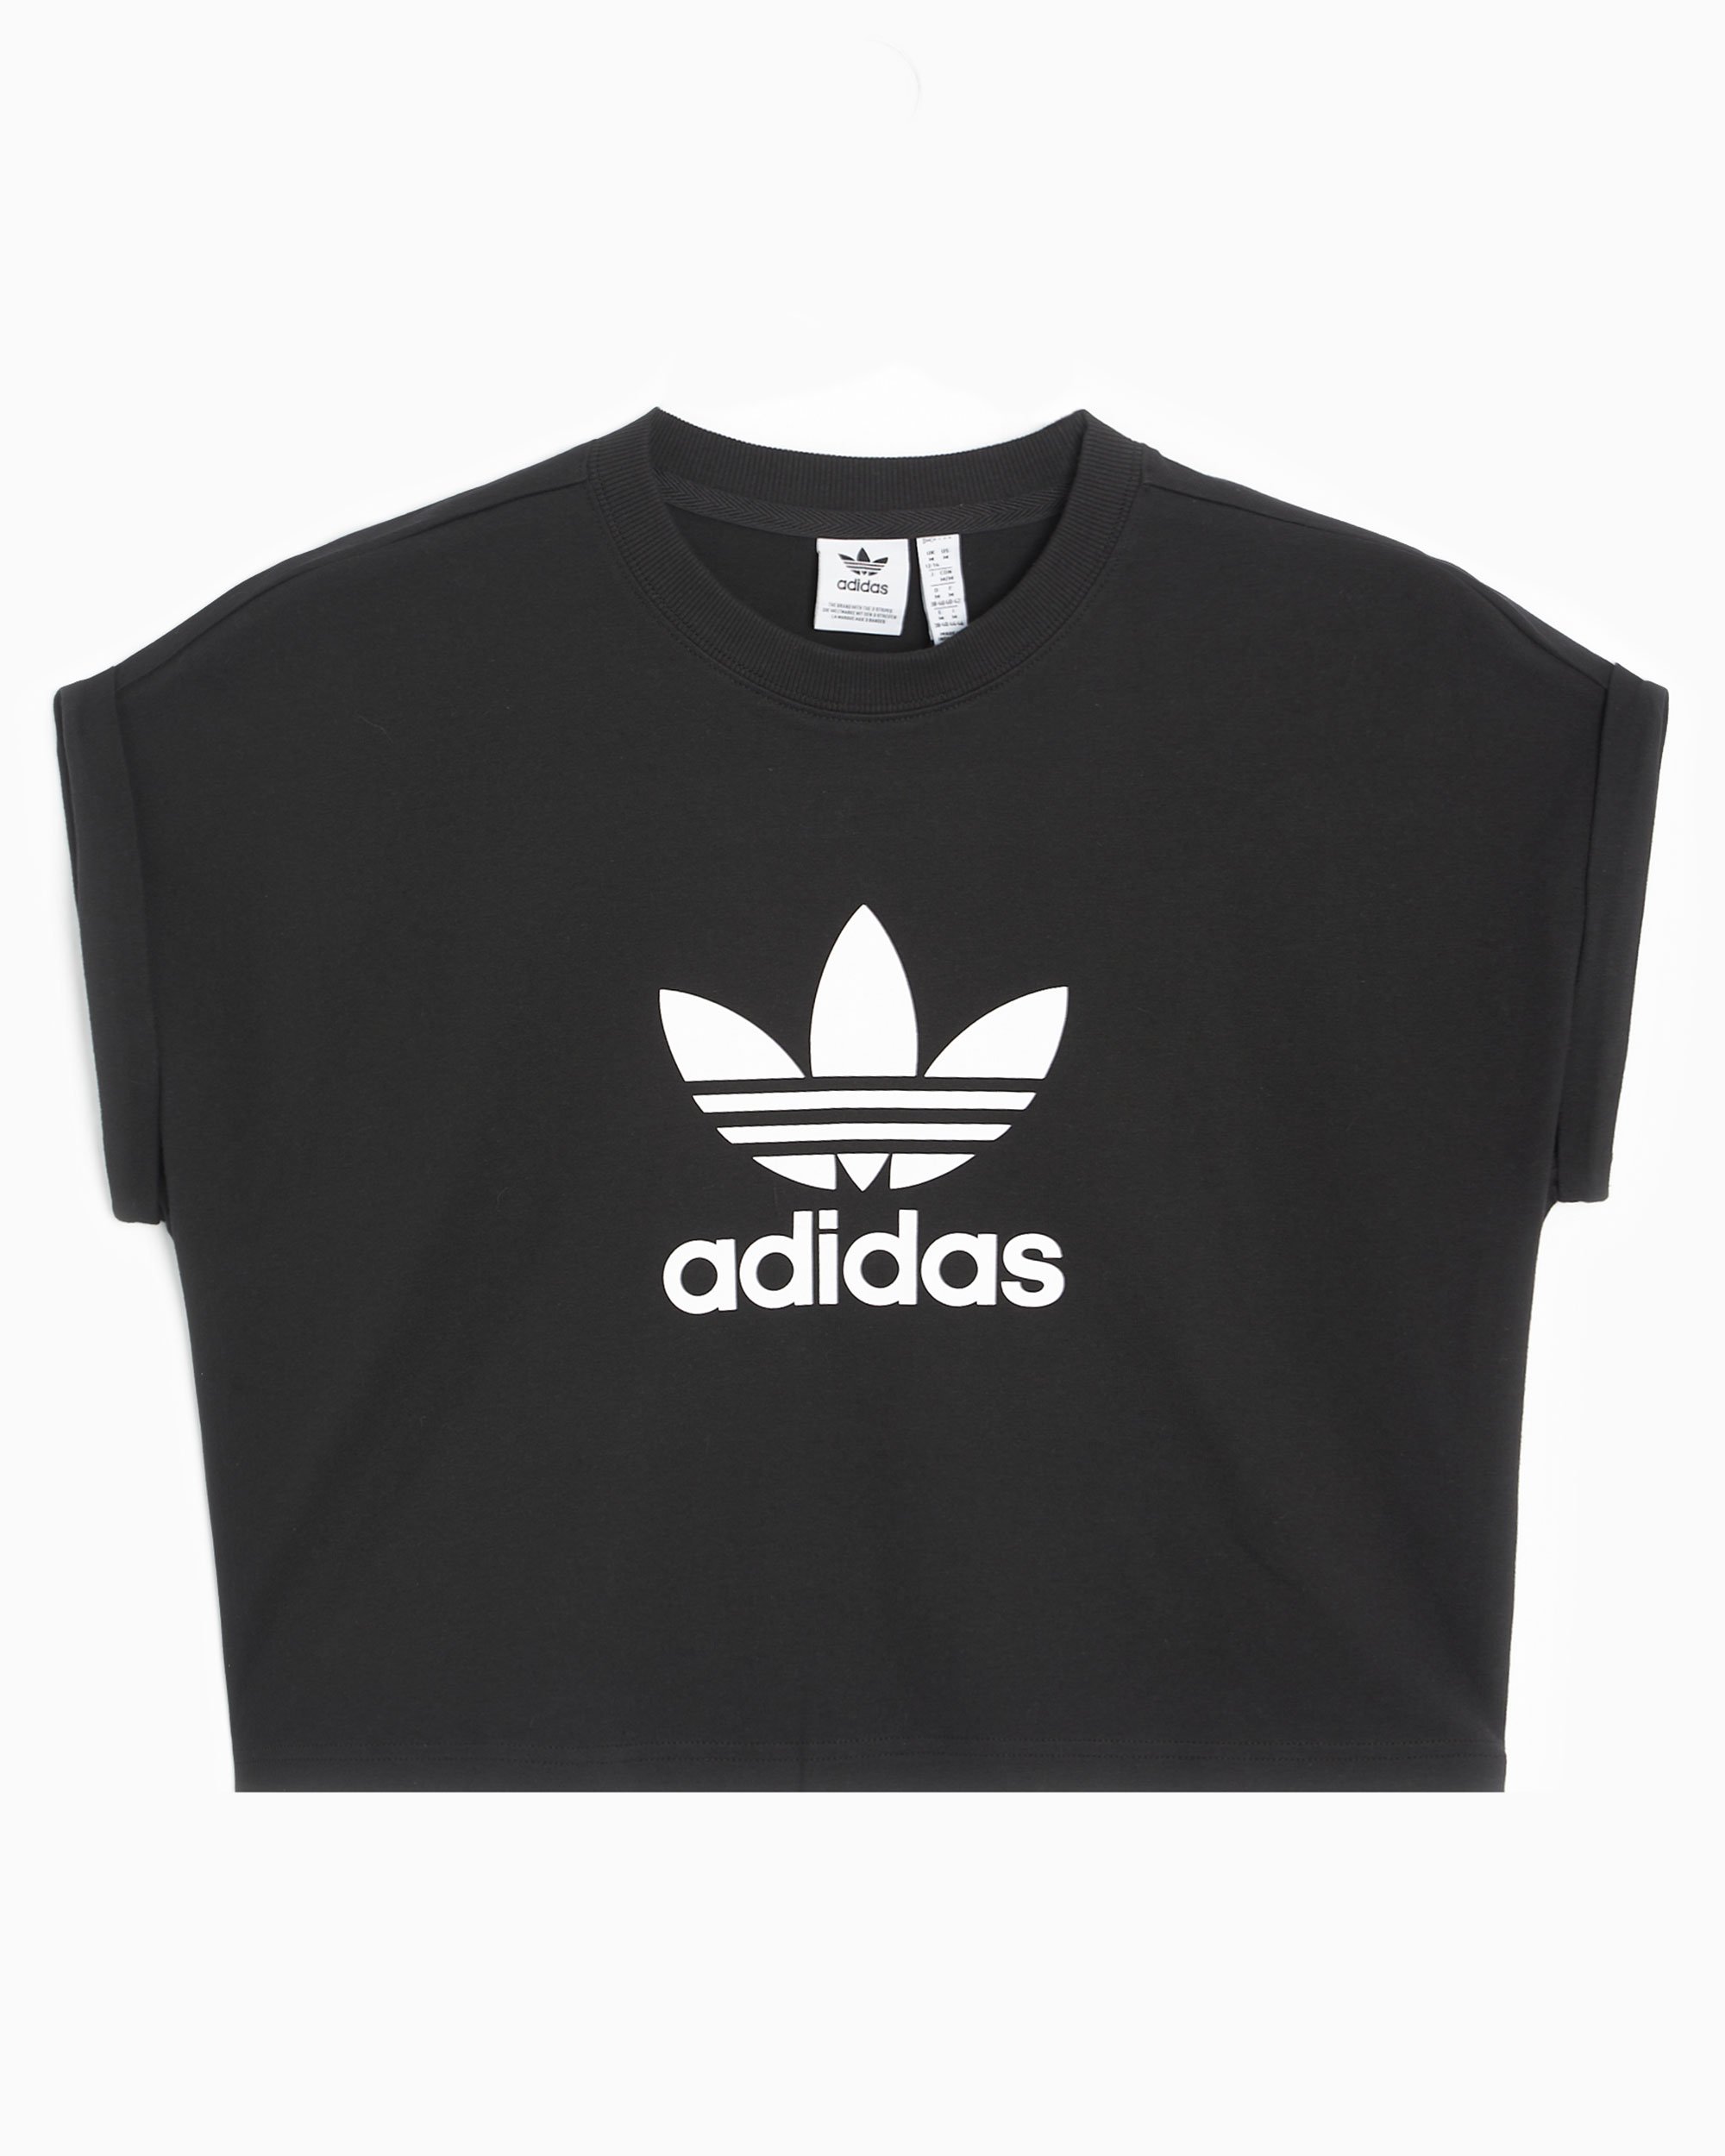 adidas Originals Women's Cropped T-Shirt Black IB1406| Buy Online at ...